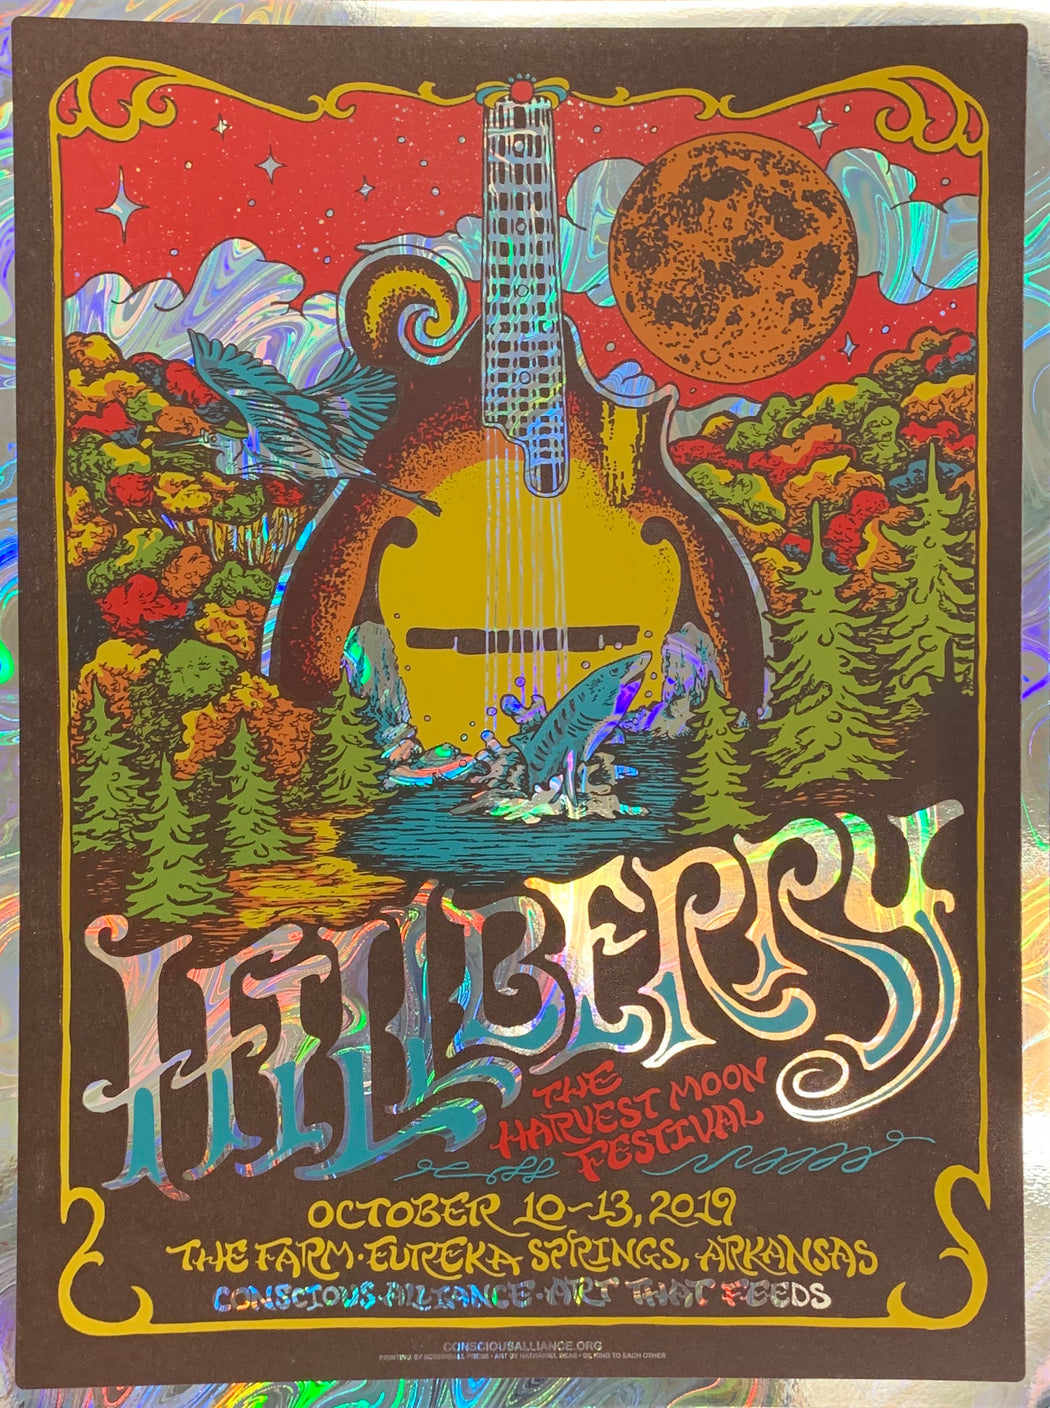 Hillberry Music Festival - 2019